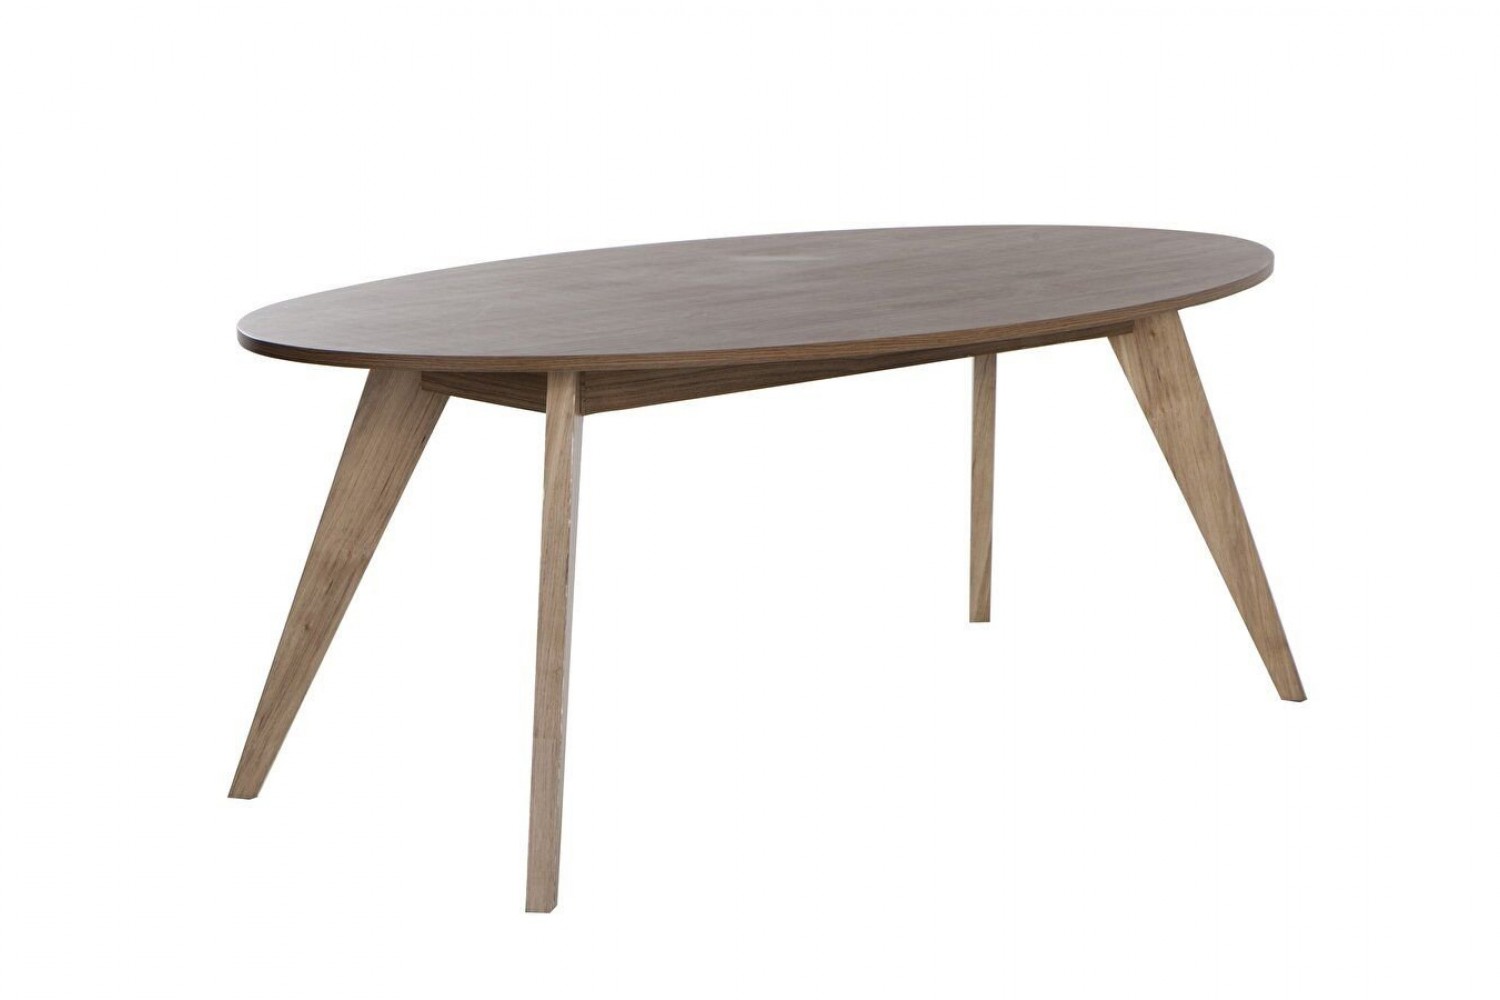 Lena Table